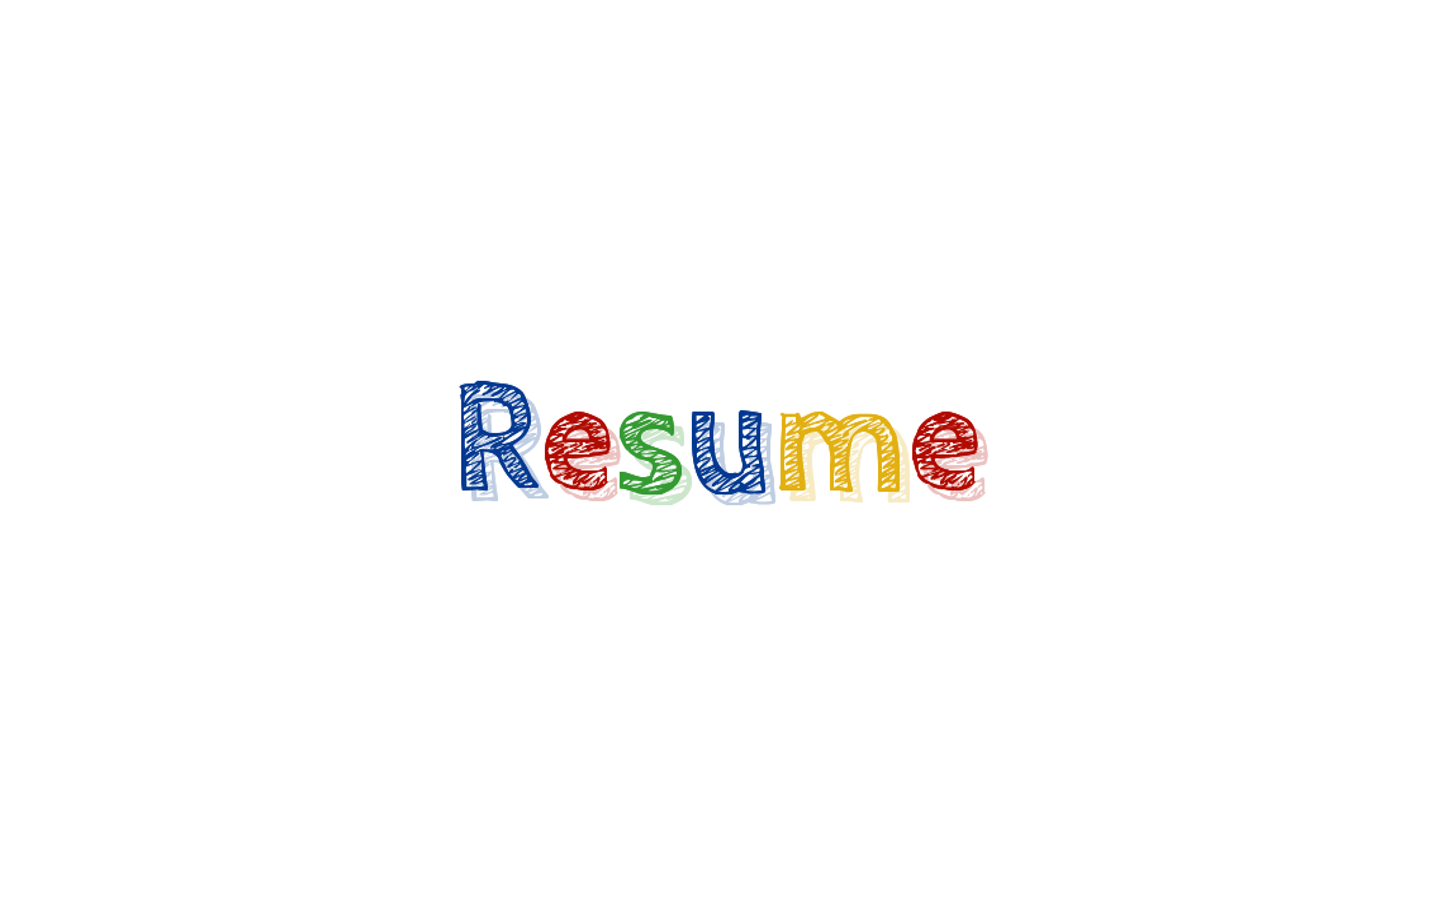 How to write resume?